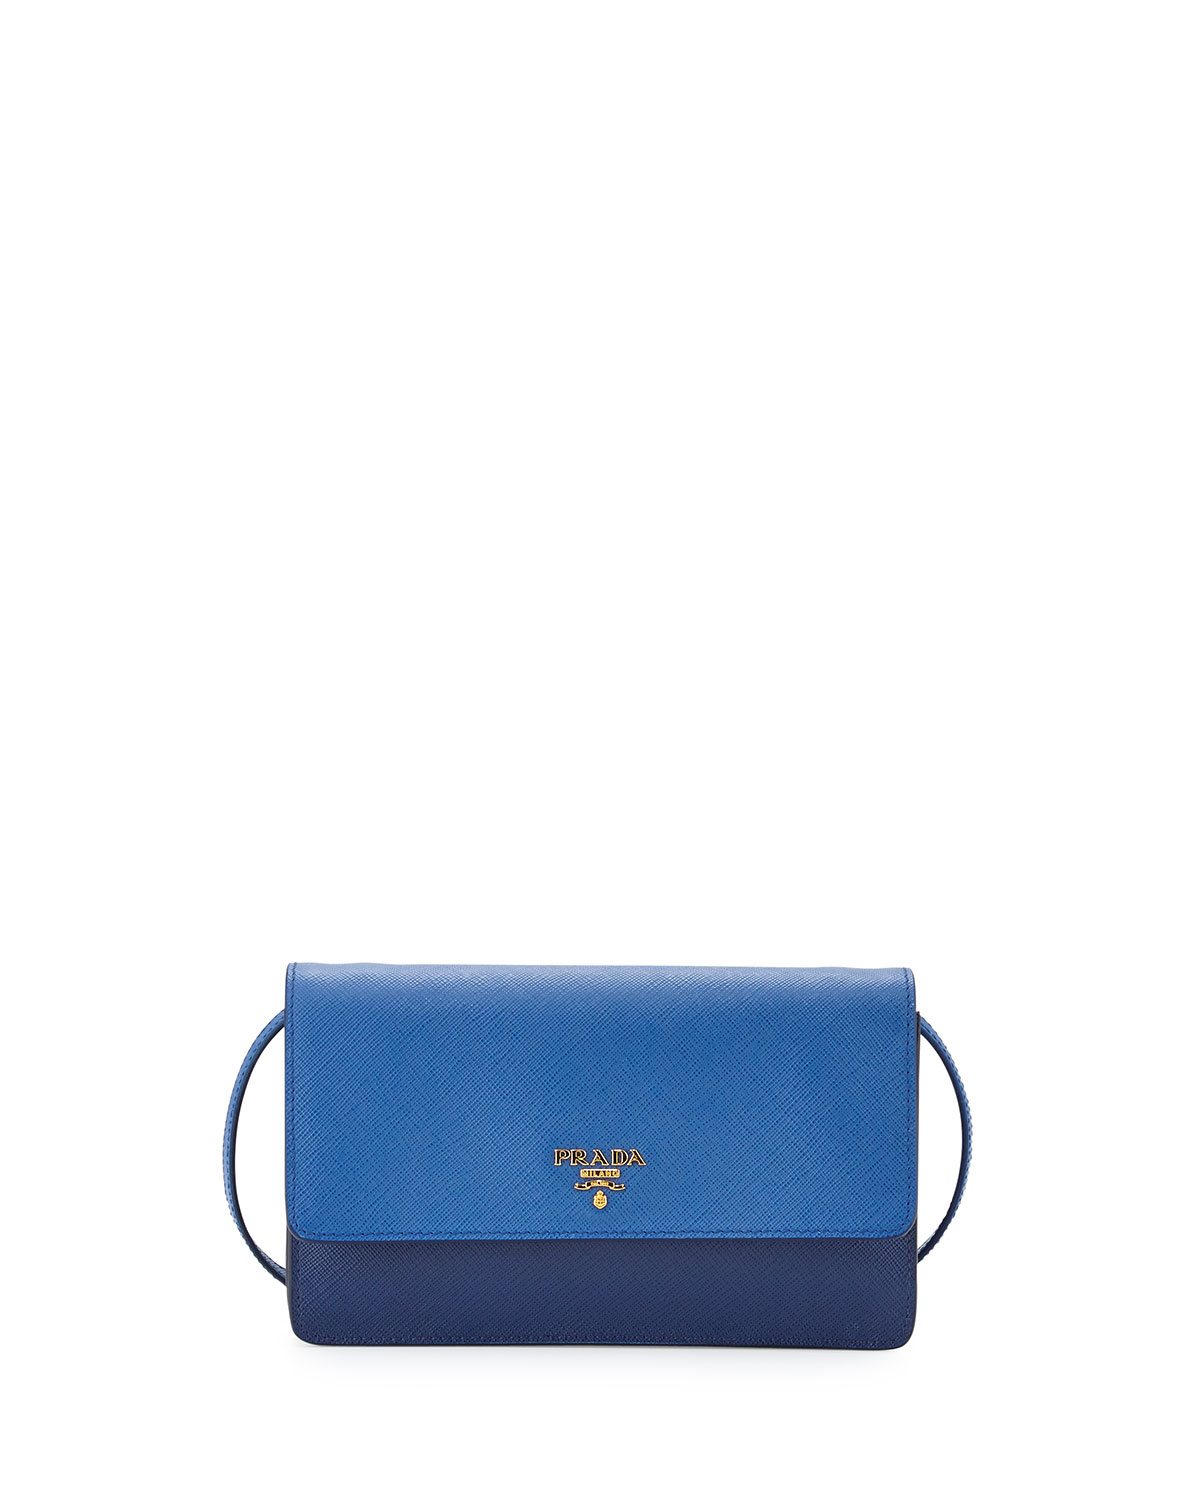 Prada Two-Toned Mini Leather Cross-Body Bag in Blue (DARK BLUE ...  